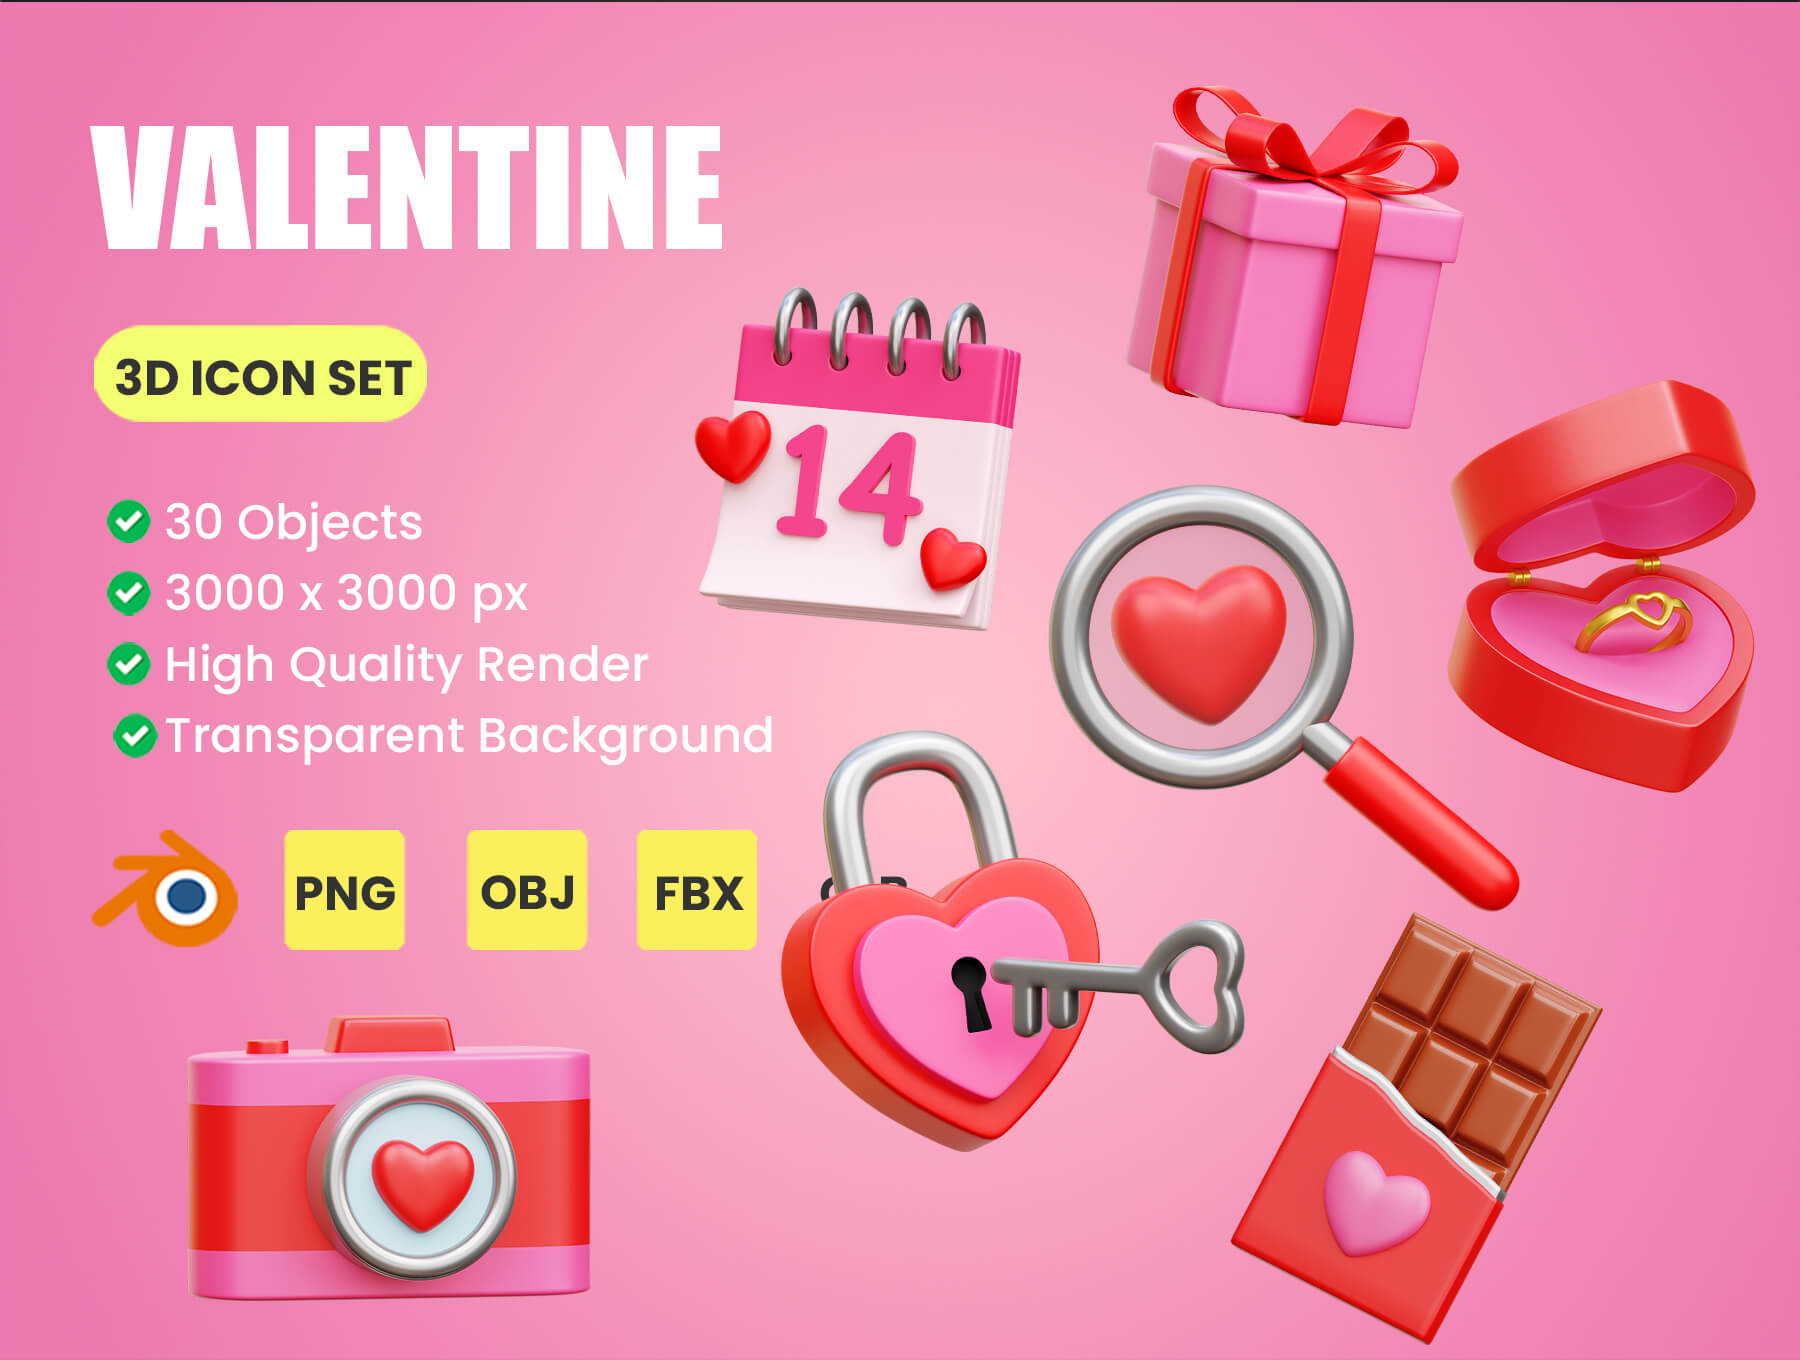 情侣社交类应用图标模板素材Valentine 3D Icon Illustrations插图